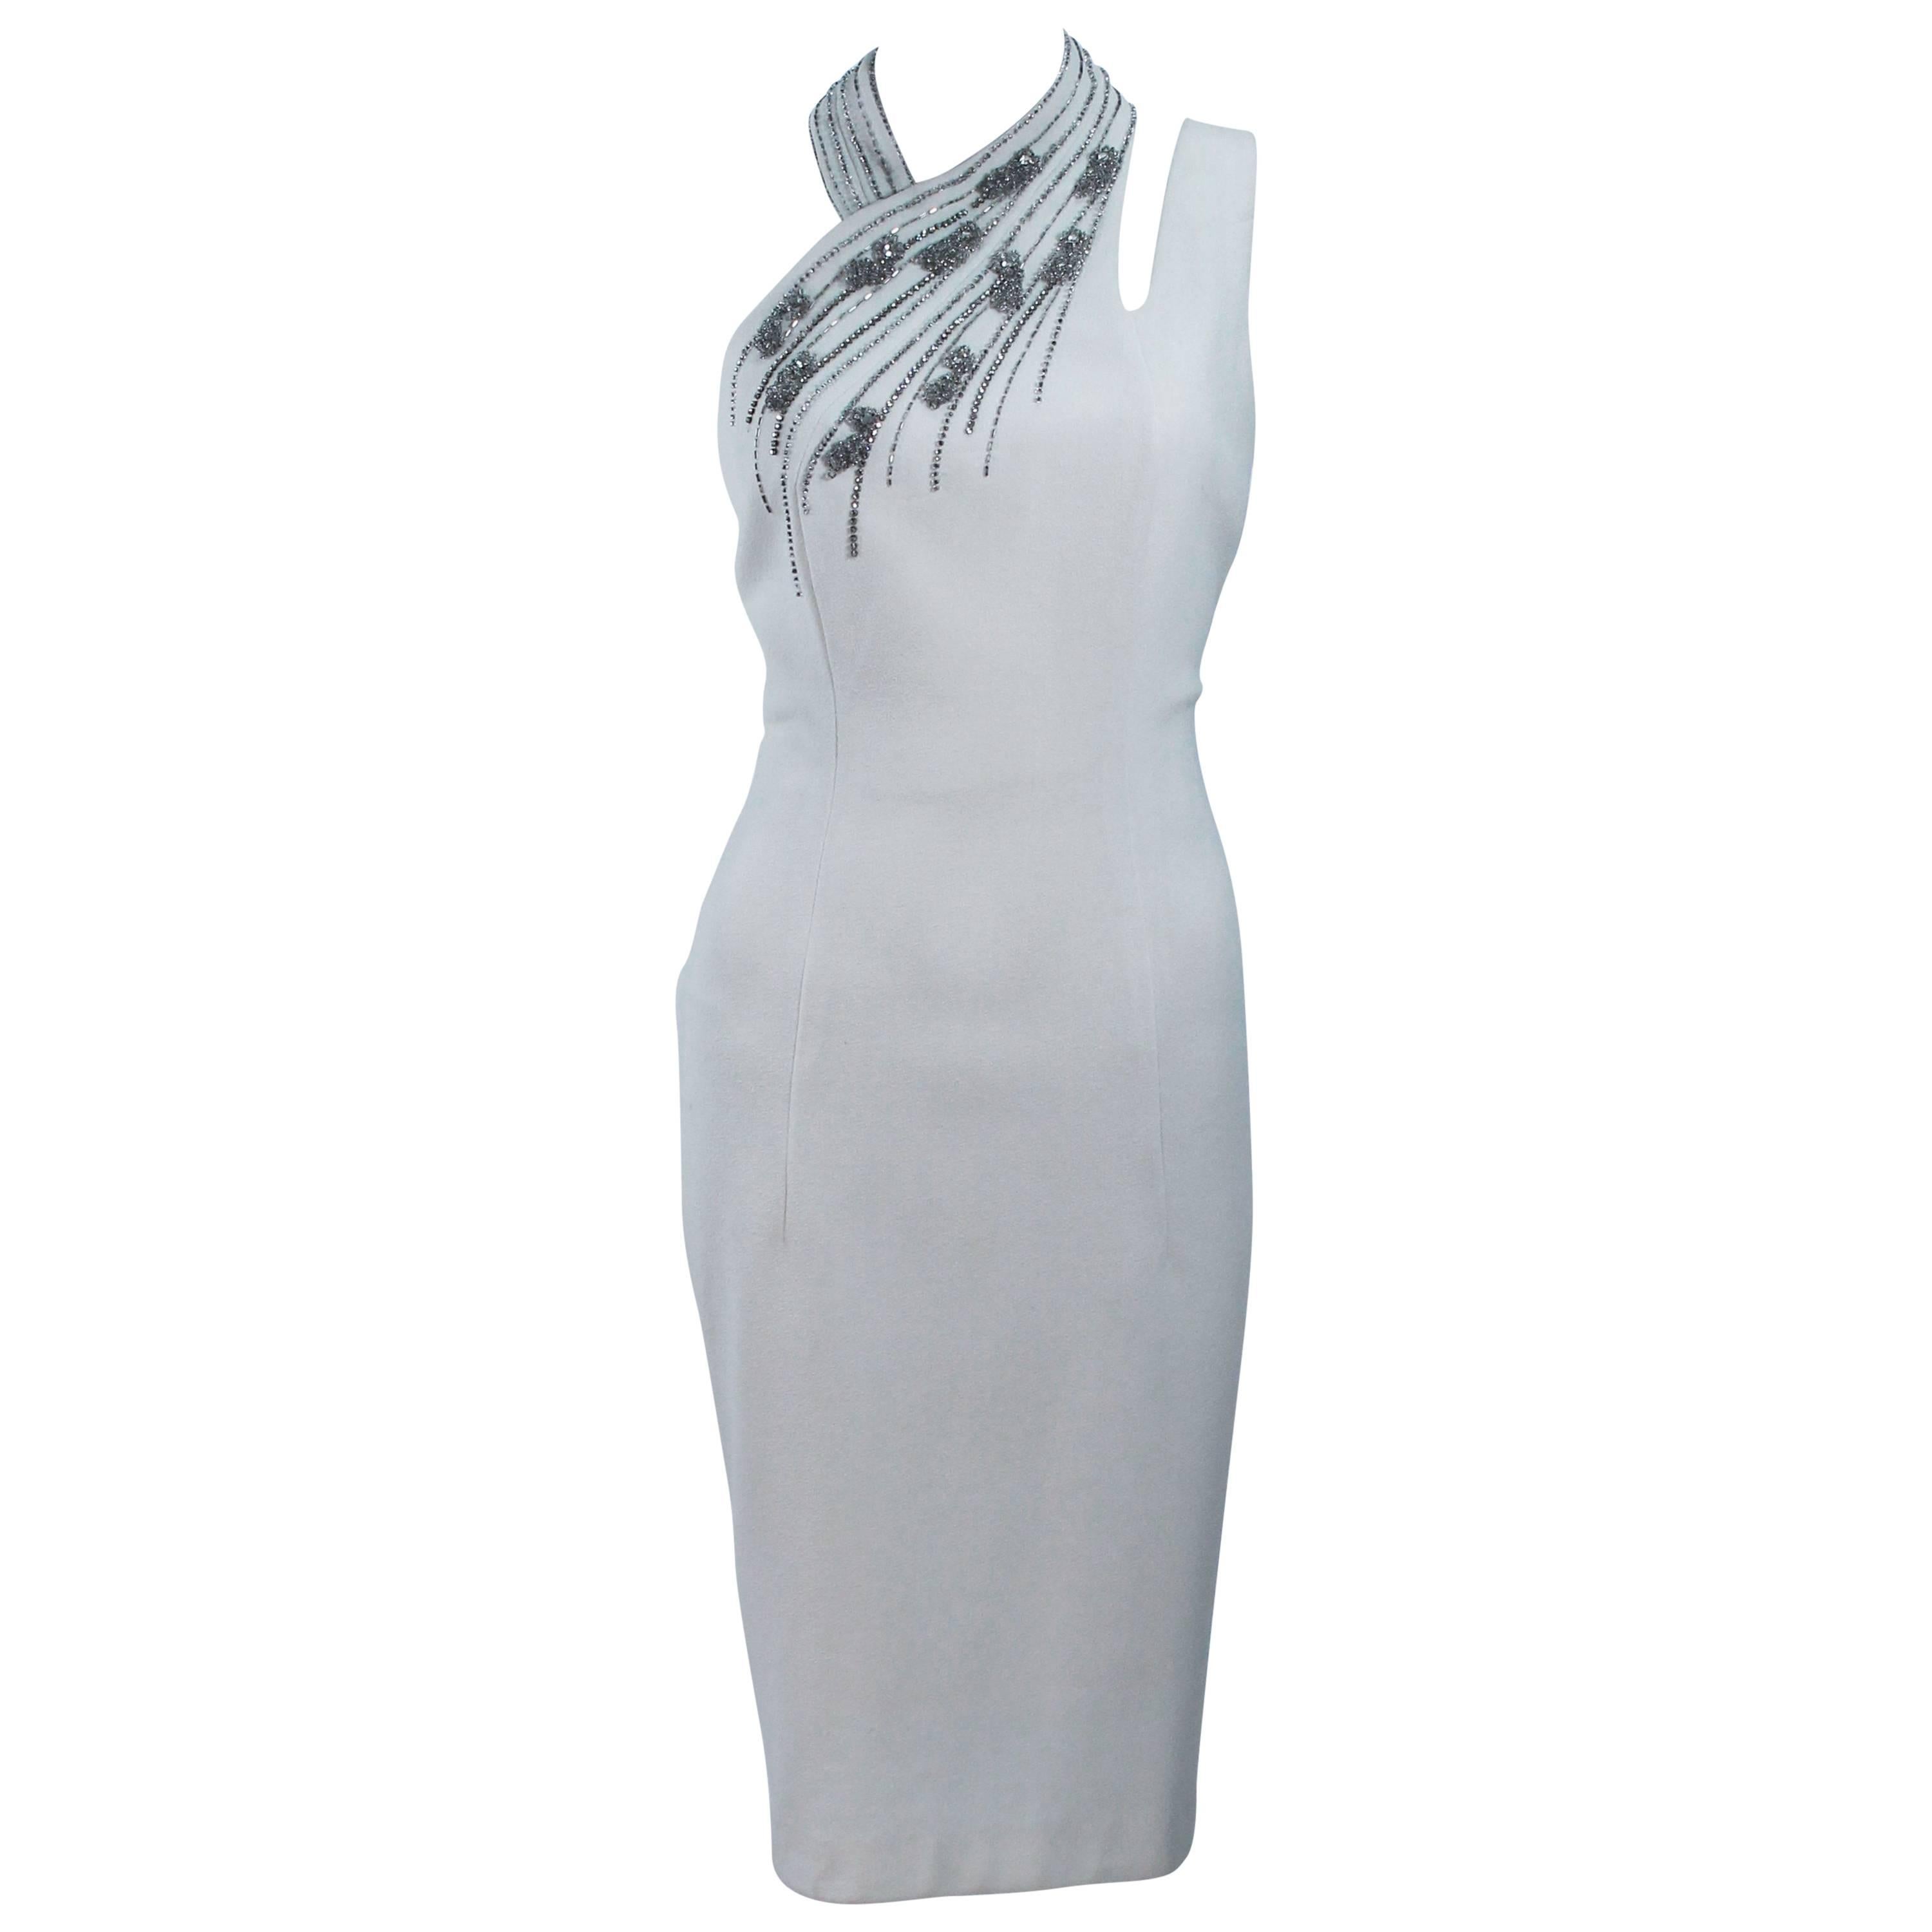 SYDNEY NORTH White Rhinestone Embellished Asymmetrical Cocktail Dress Size 6-8  For Sale